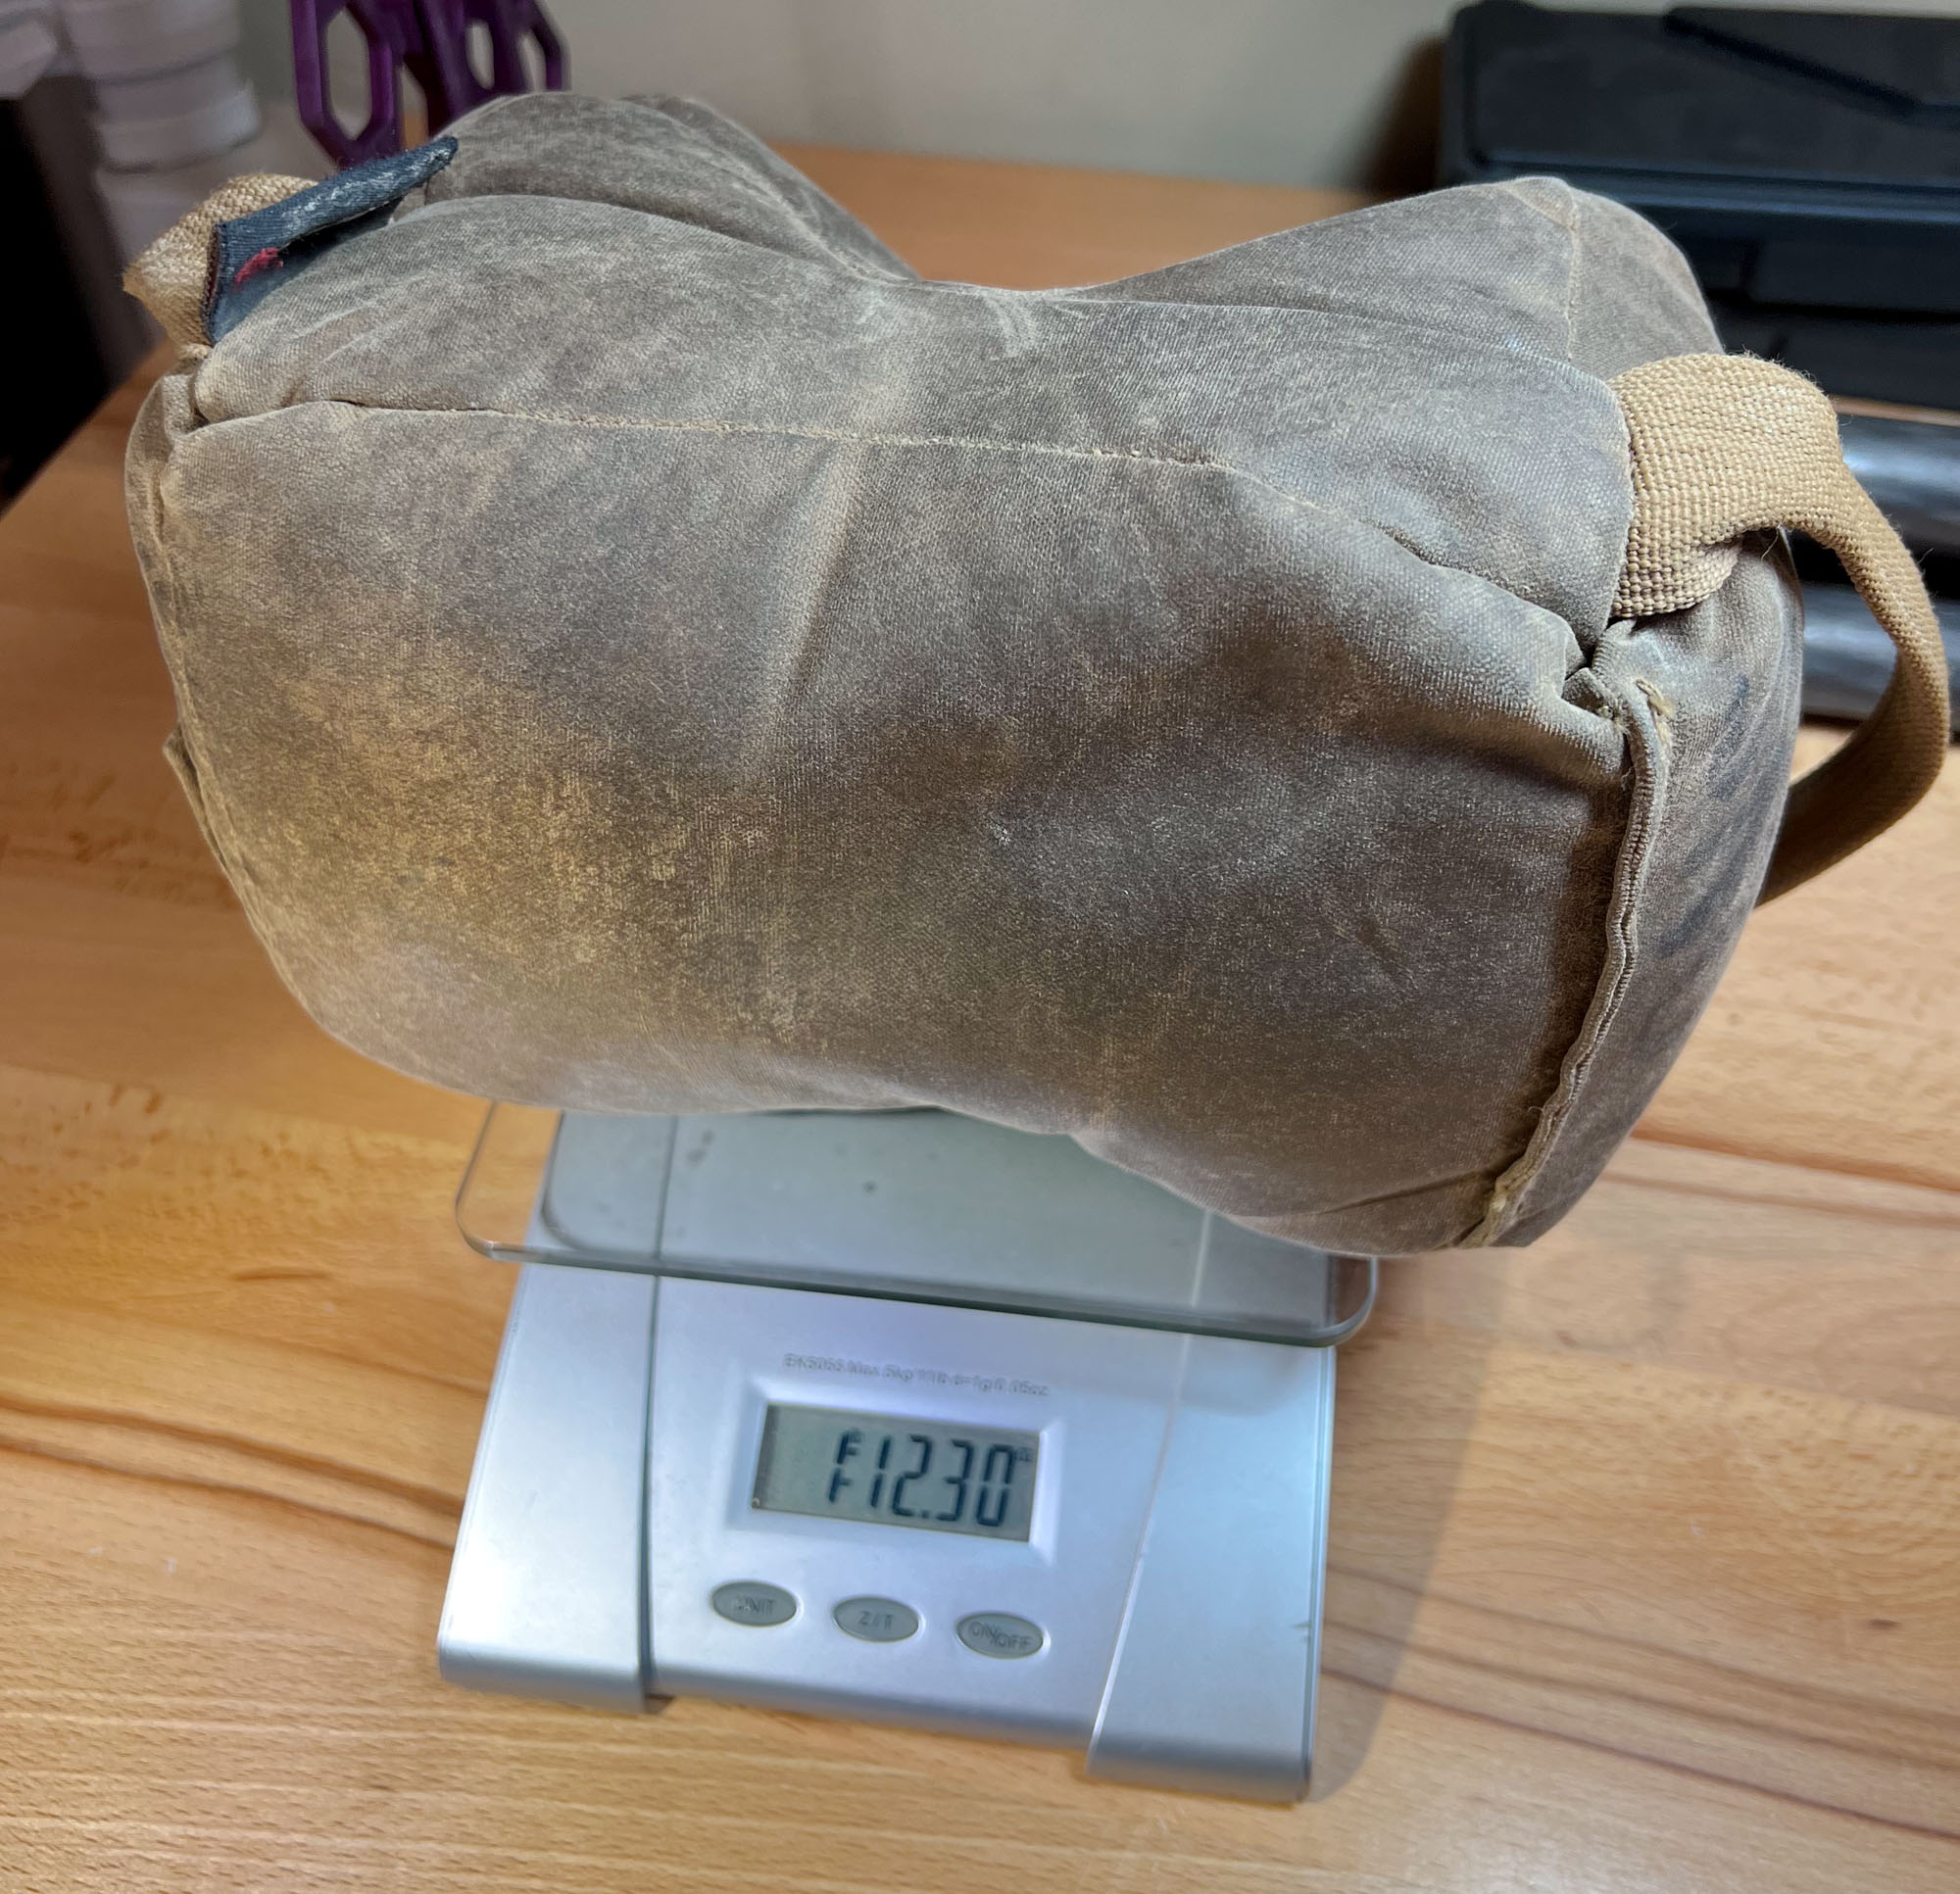 Shmedium shooting bag on a scale